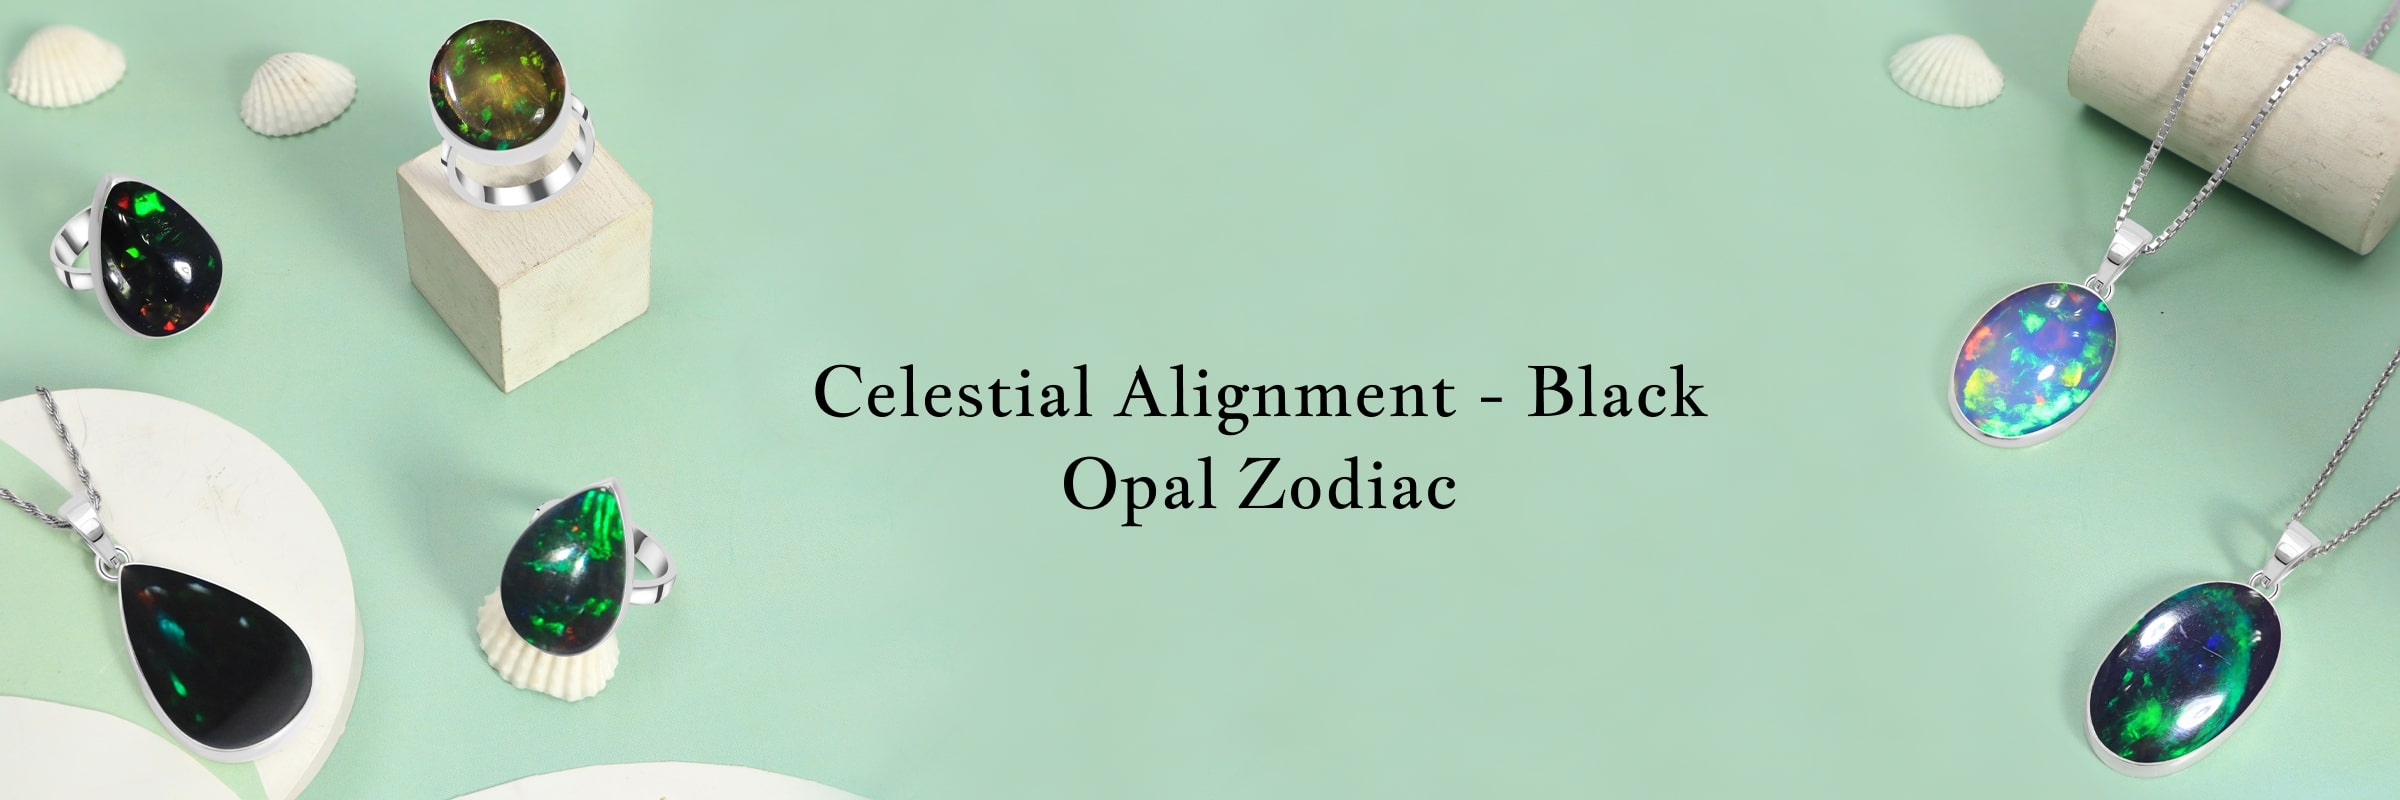 Black Opal Zodiac sign